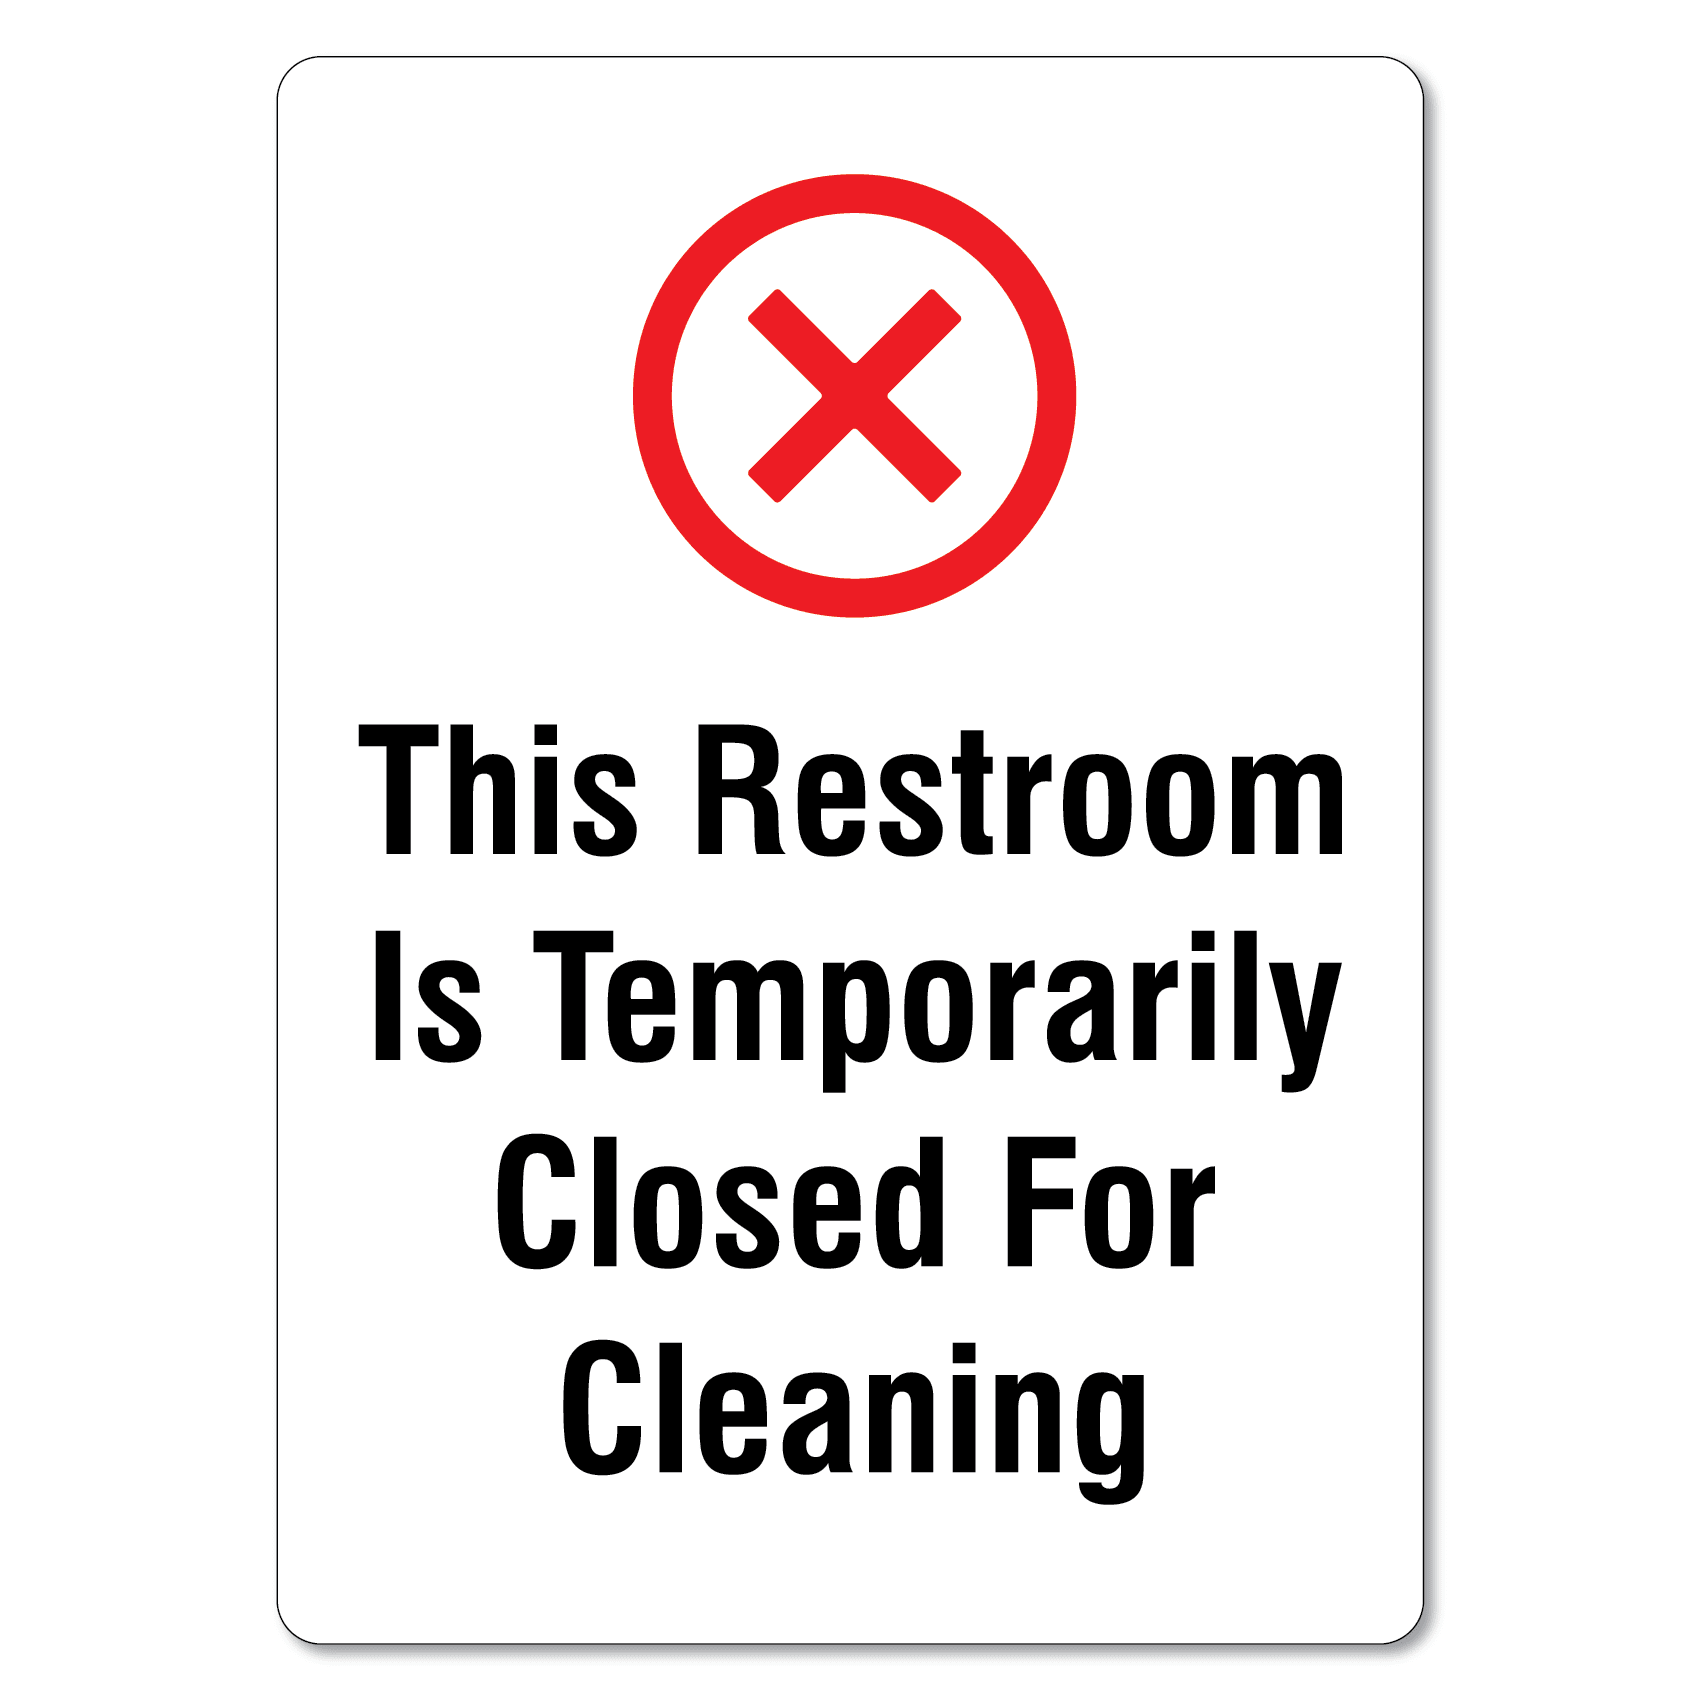 Printable Restroom Closed Sign - Image to u